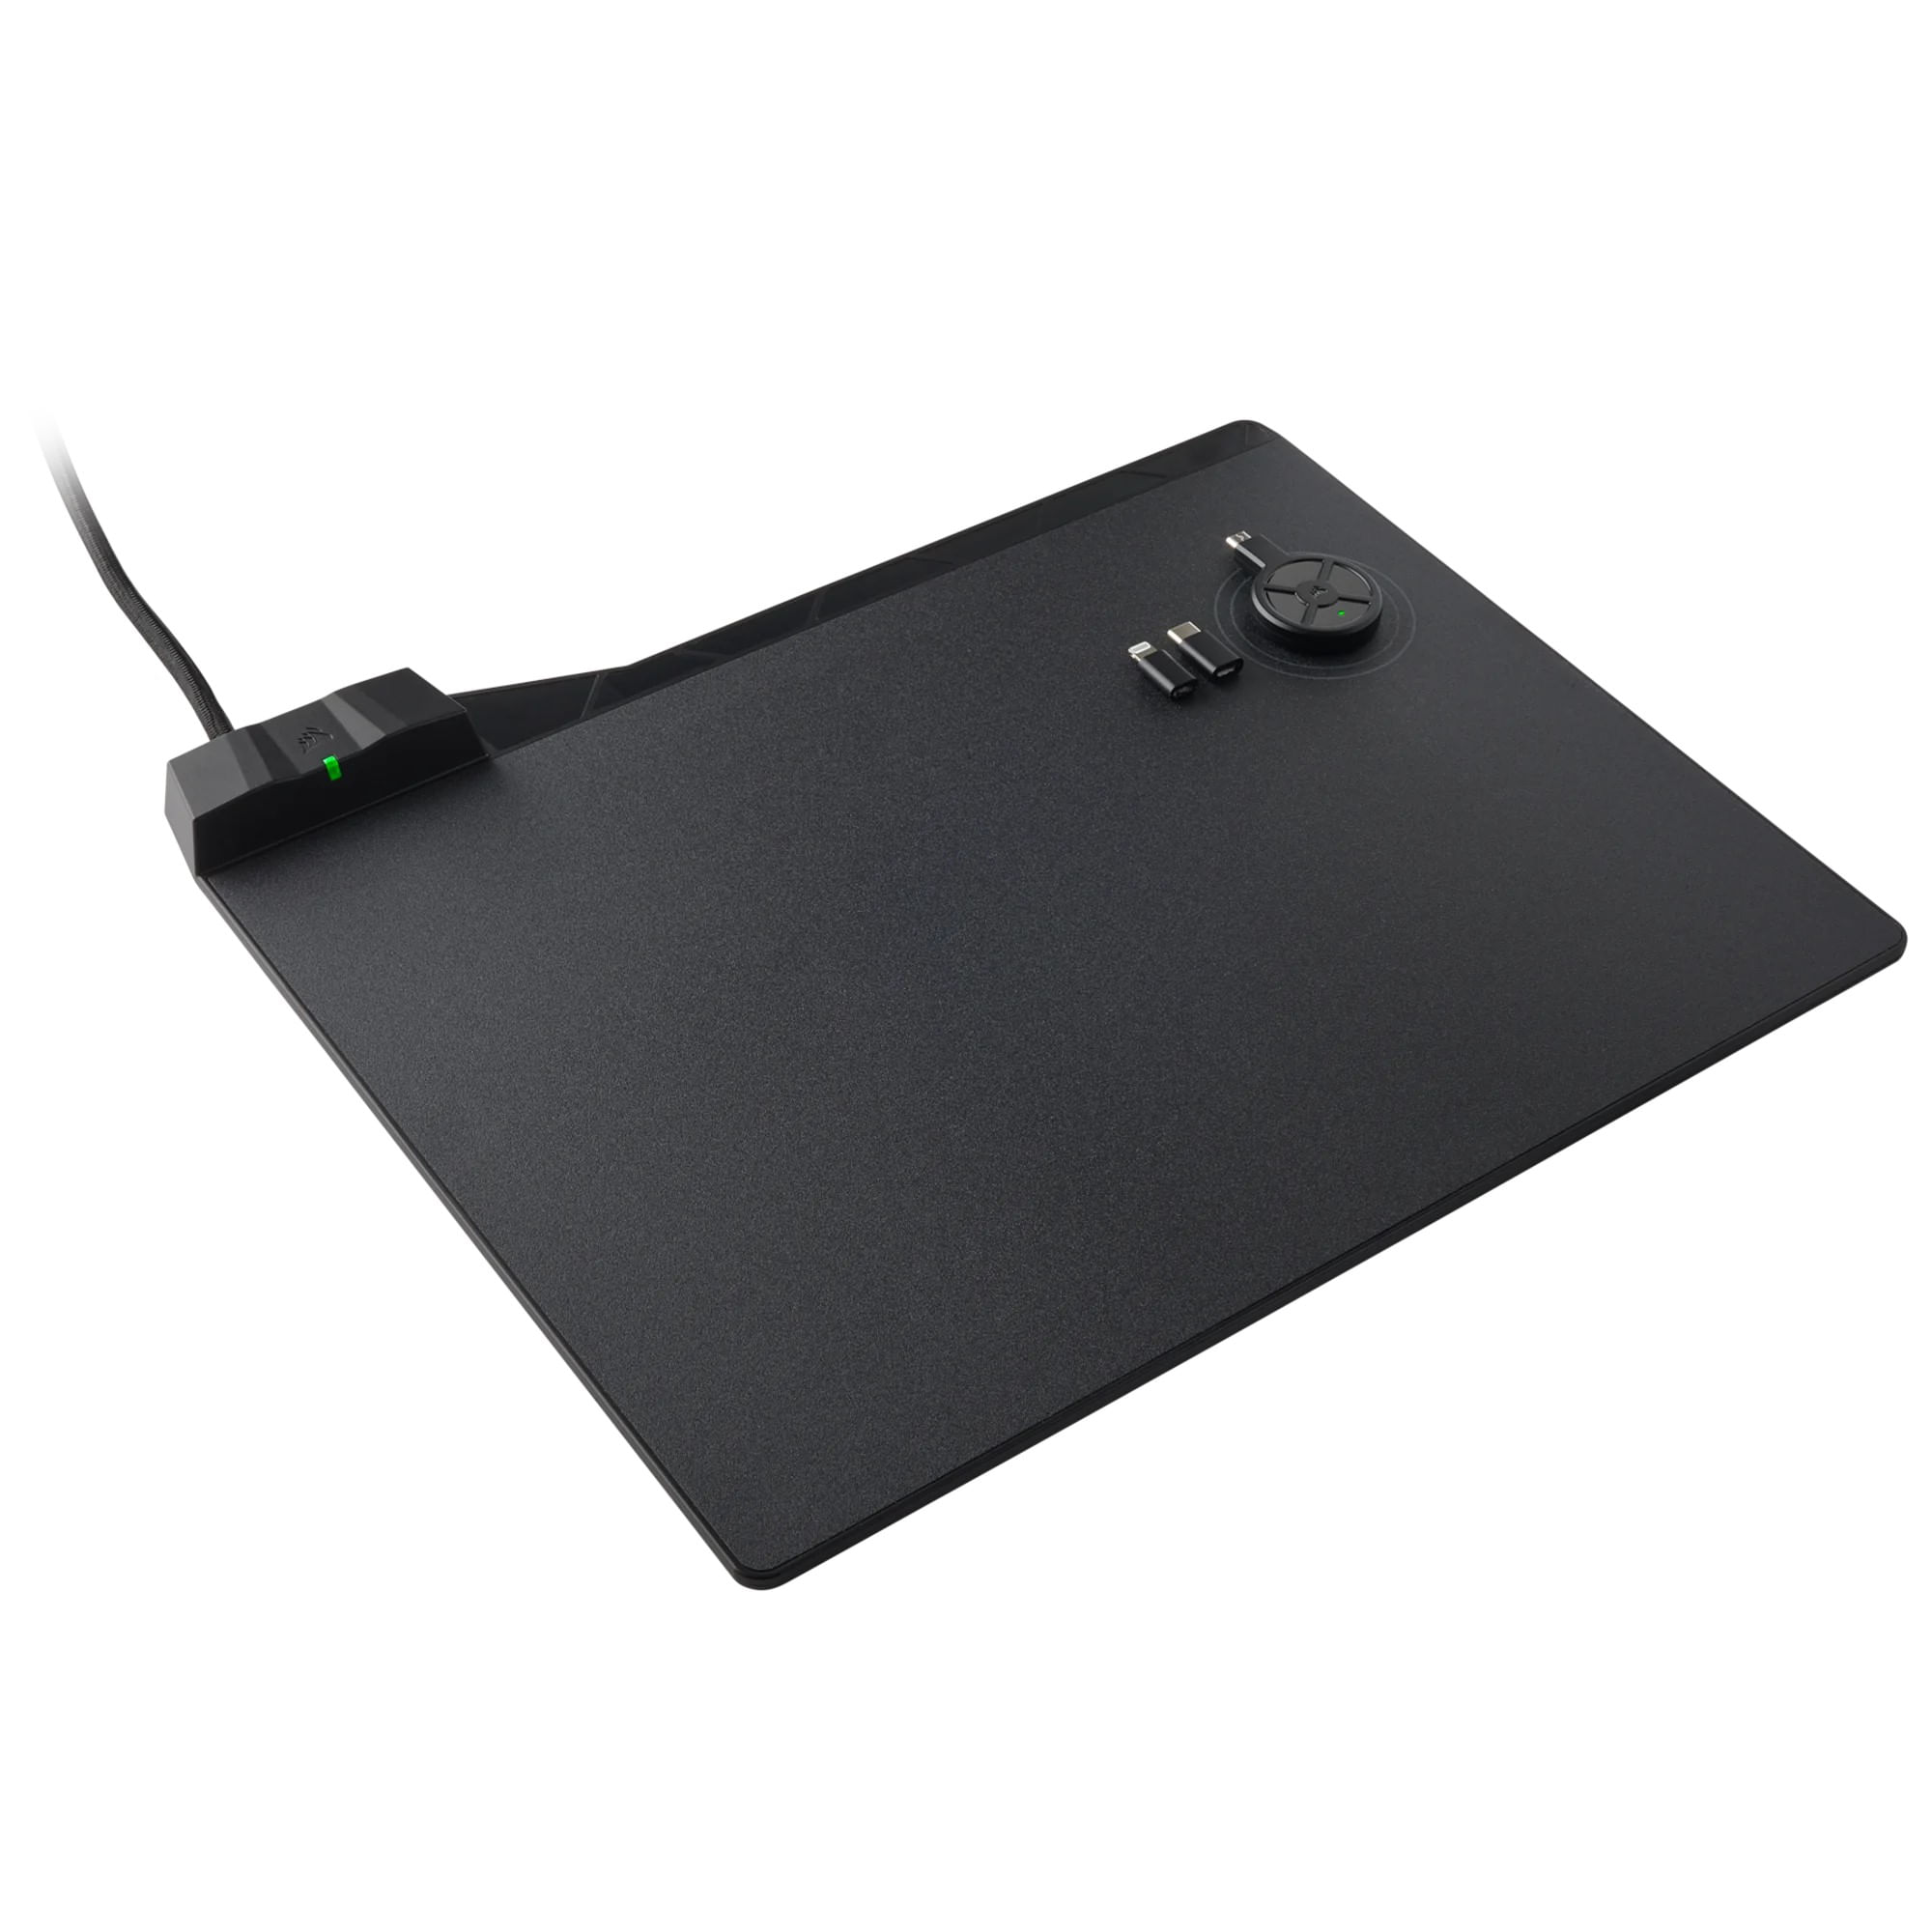 Mousepad Corsair MM1000 Qi Wireless Charging 36x26cm - CH-9440022-NA